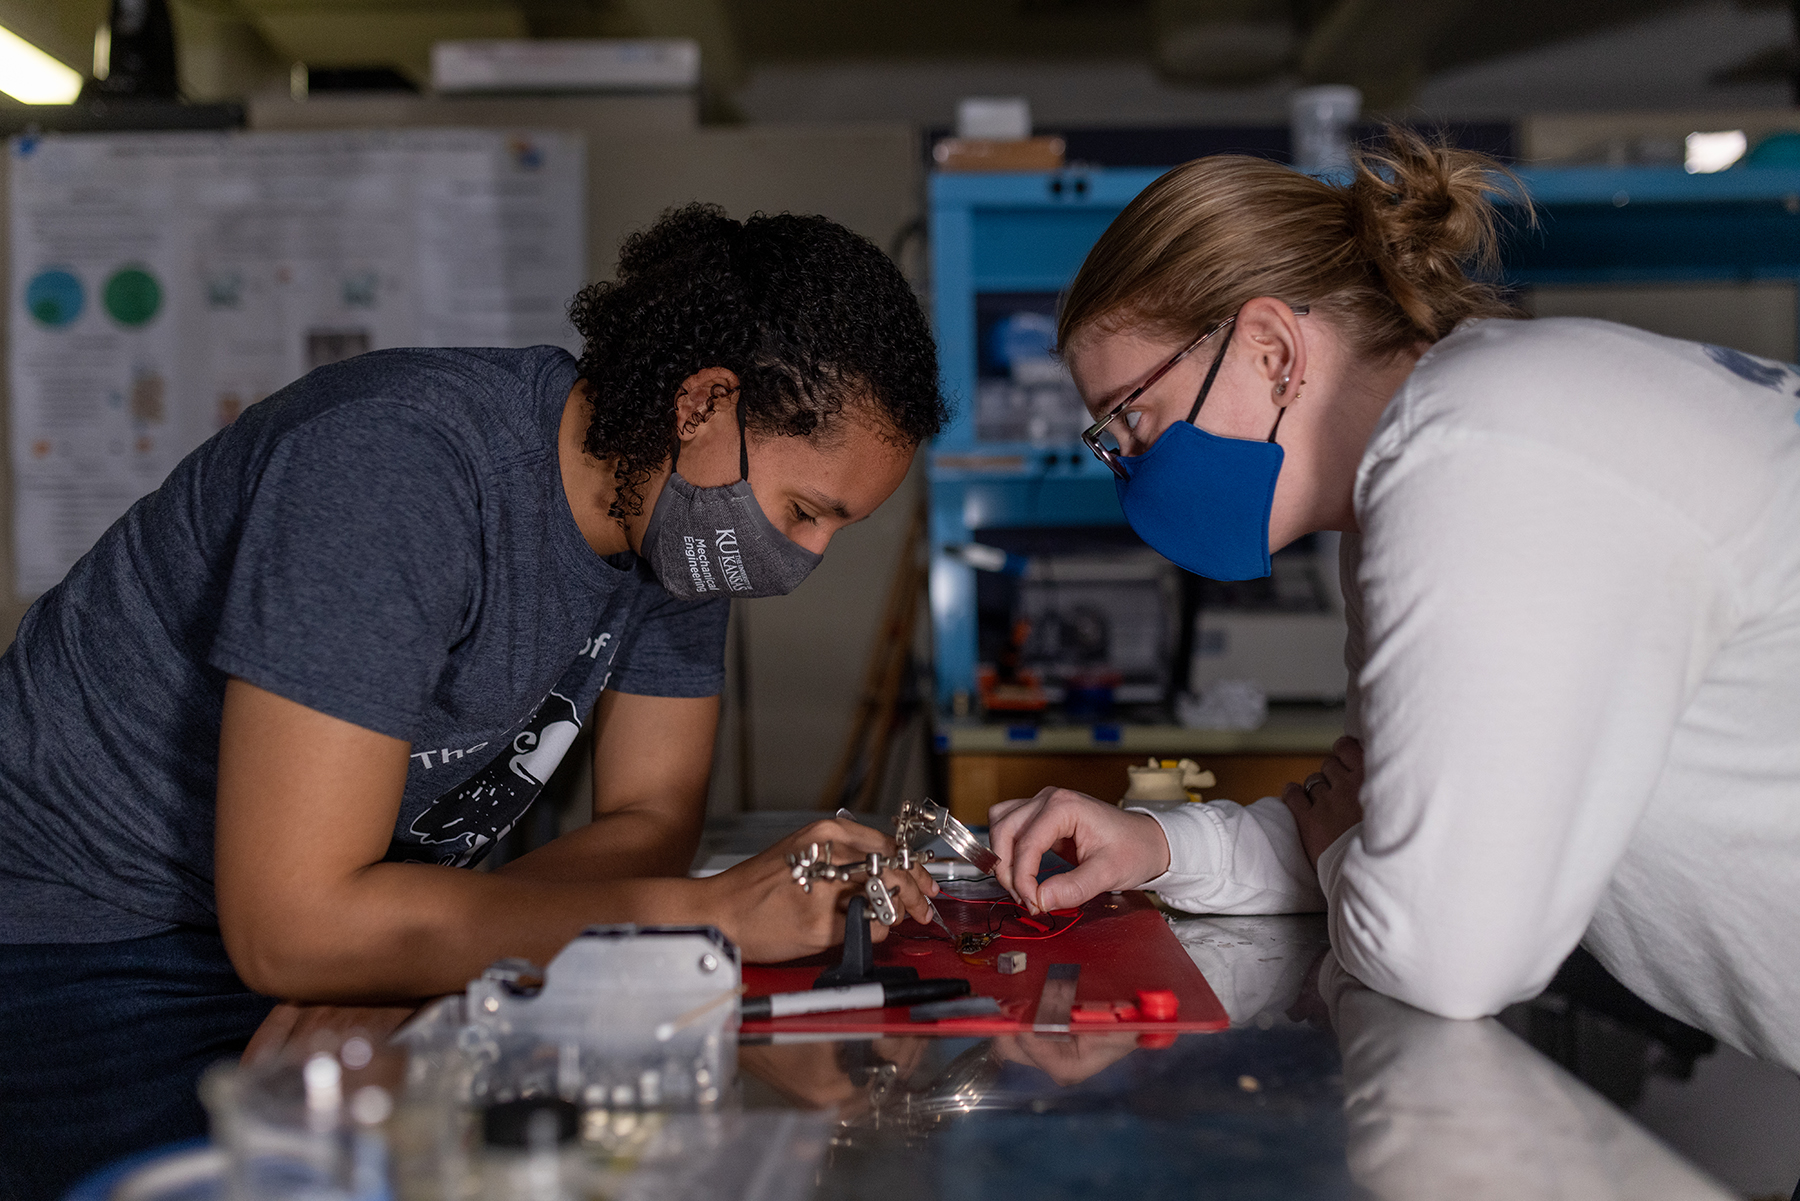 PhD student Jordan Gamble and her lab partner Tori Drapal working in Spine Biomechanics lab